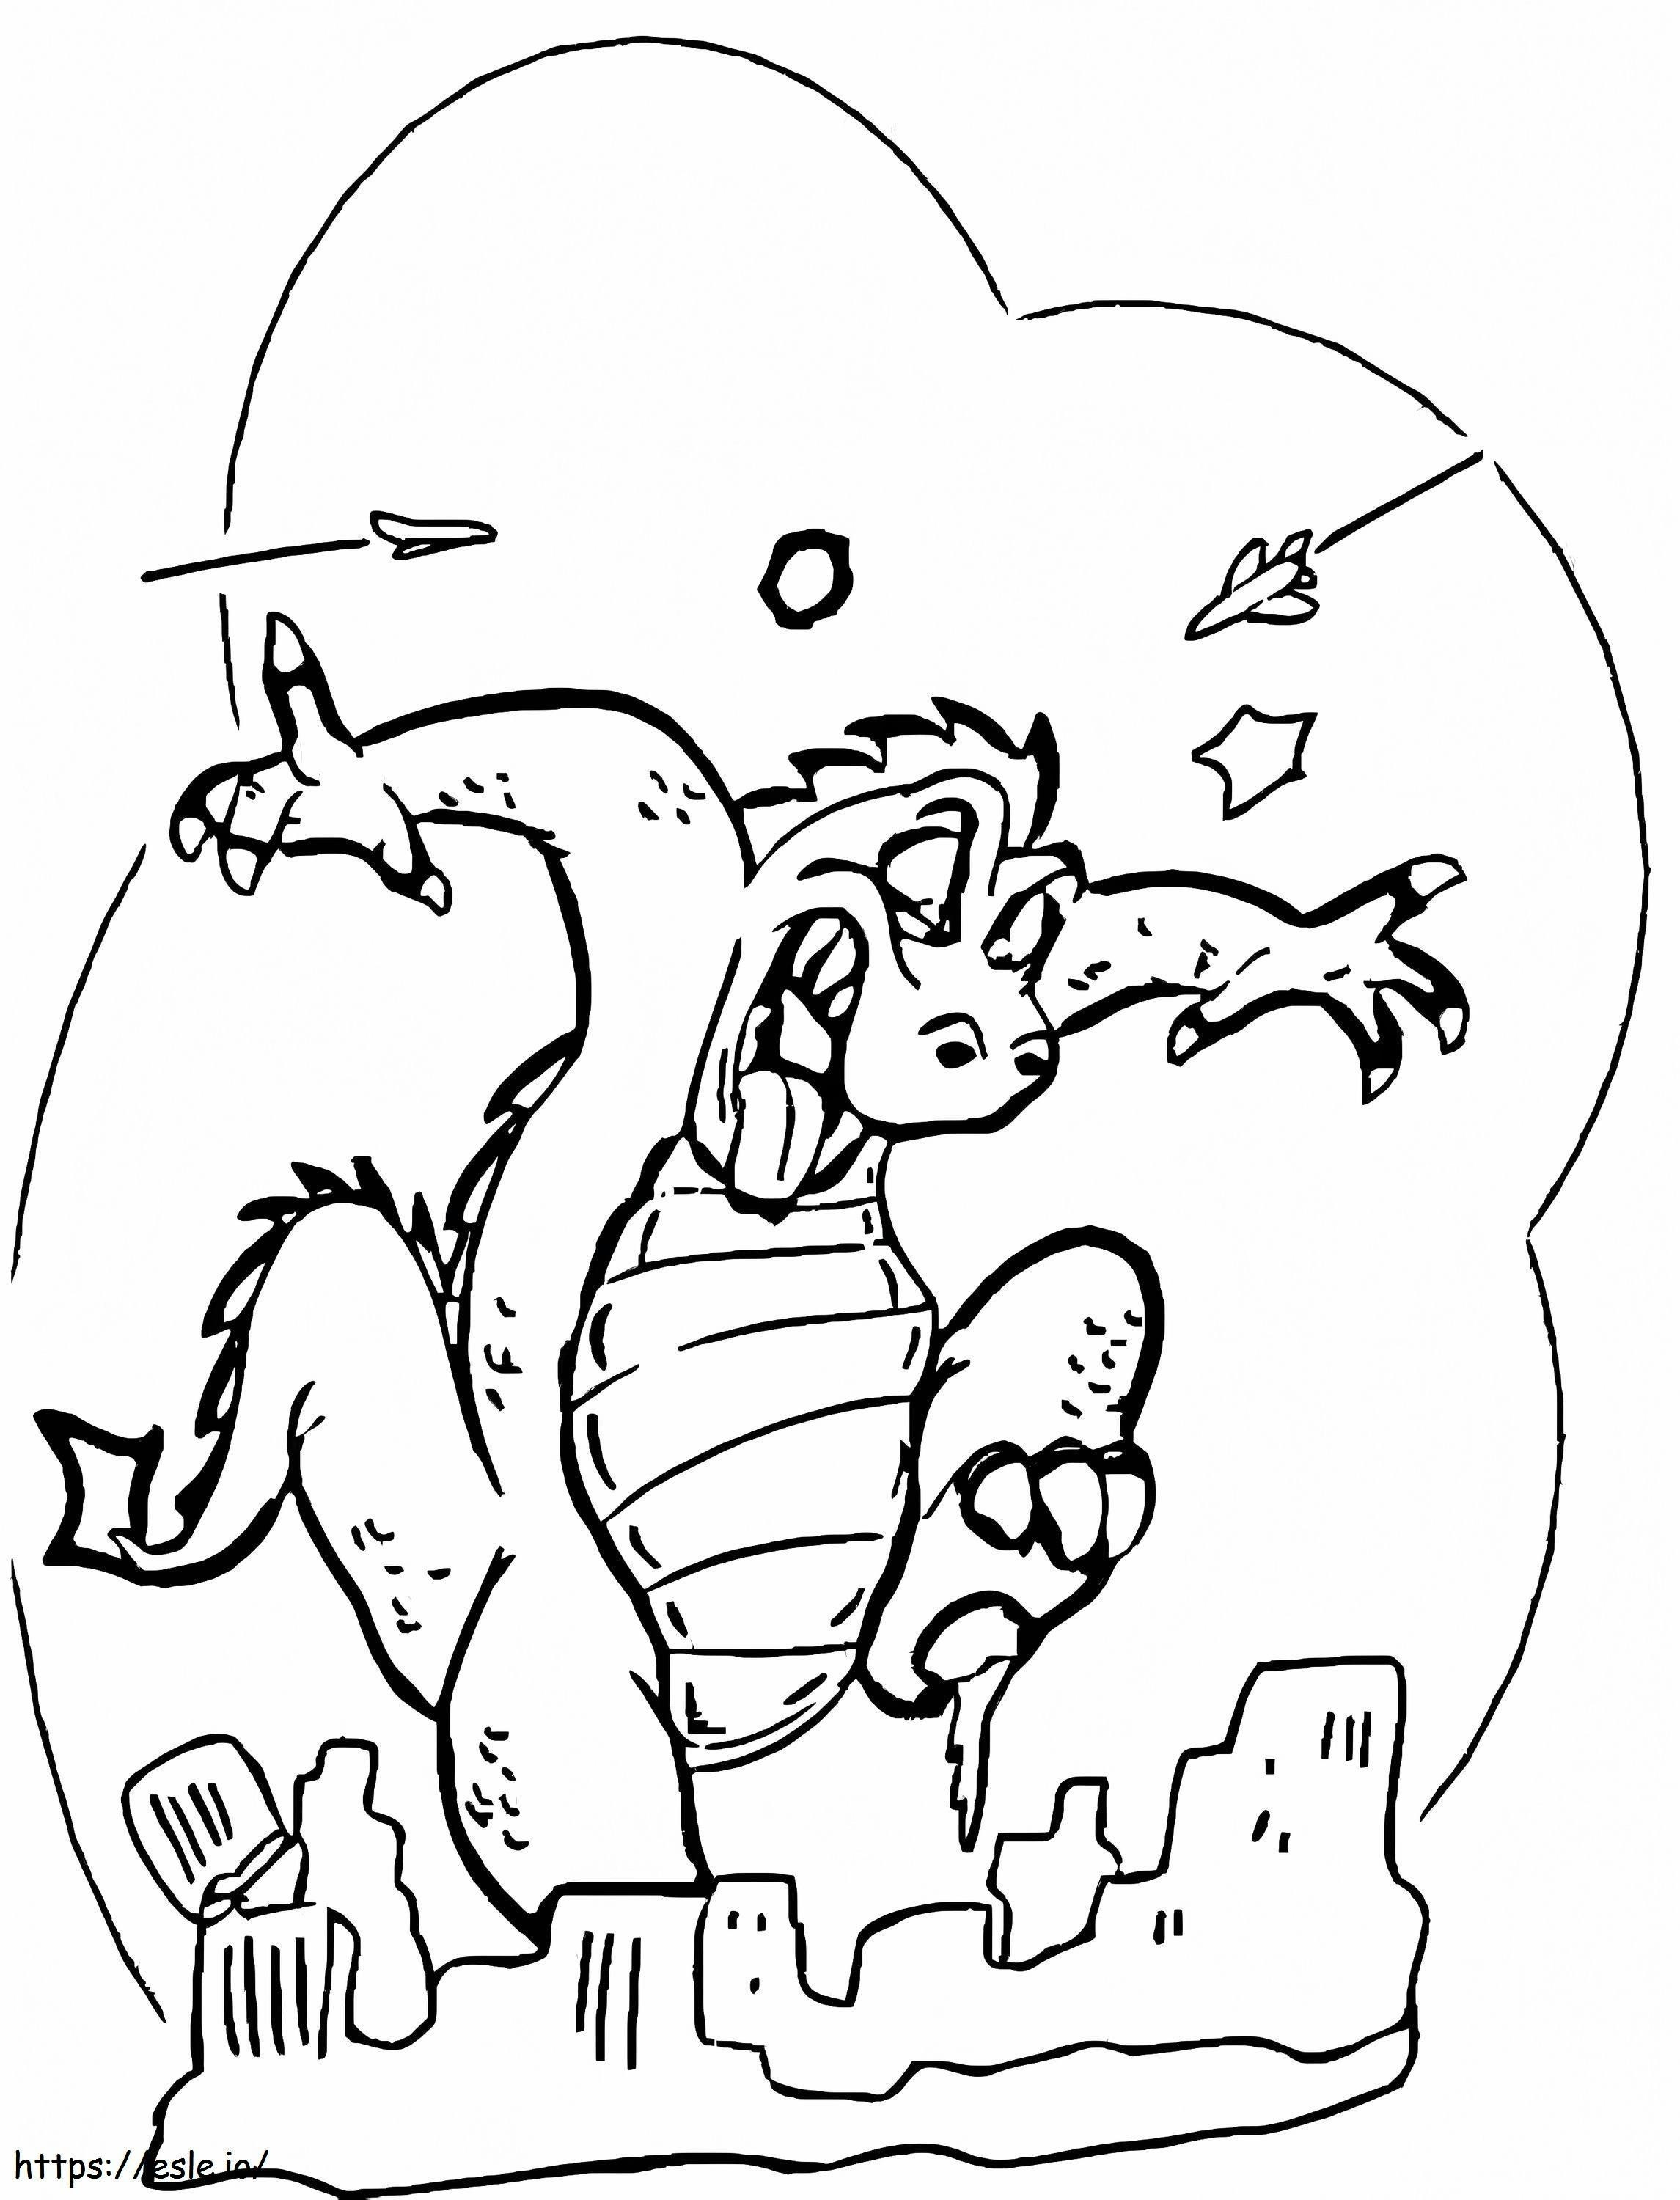 Godzilla Attacks The City coloring page